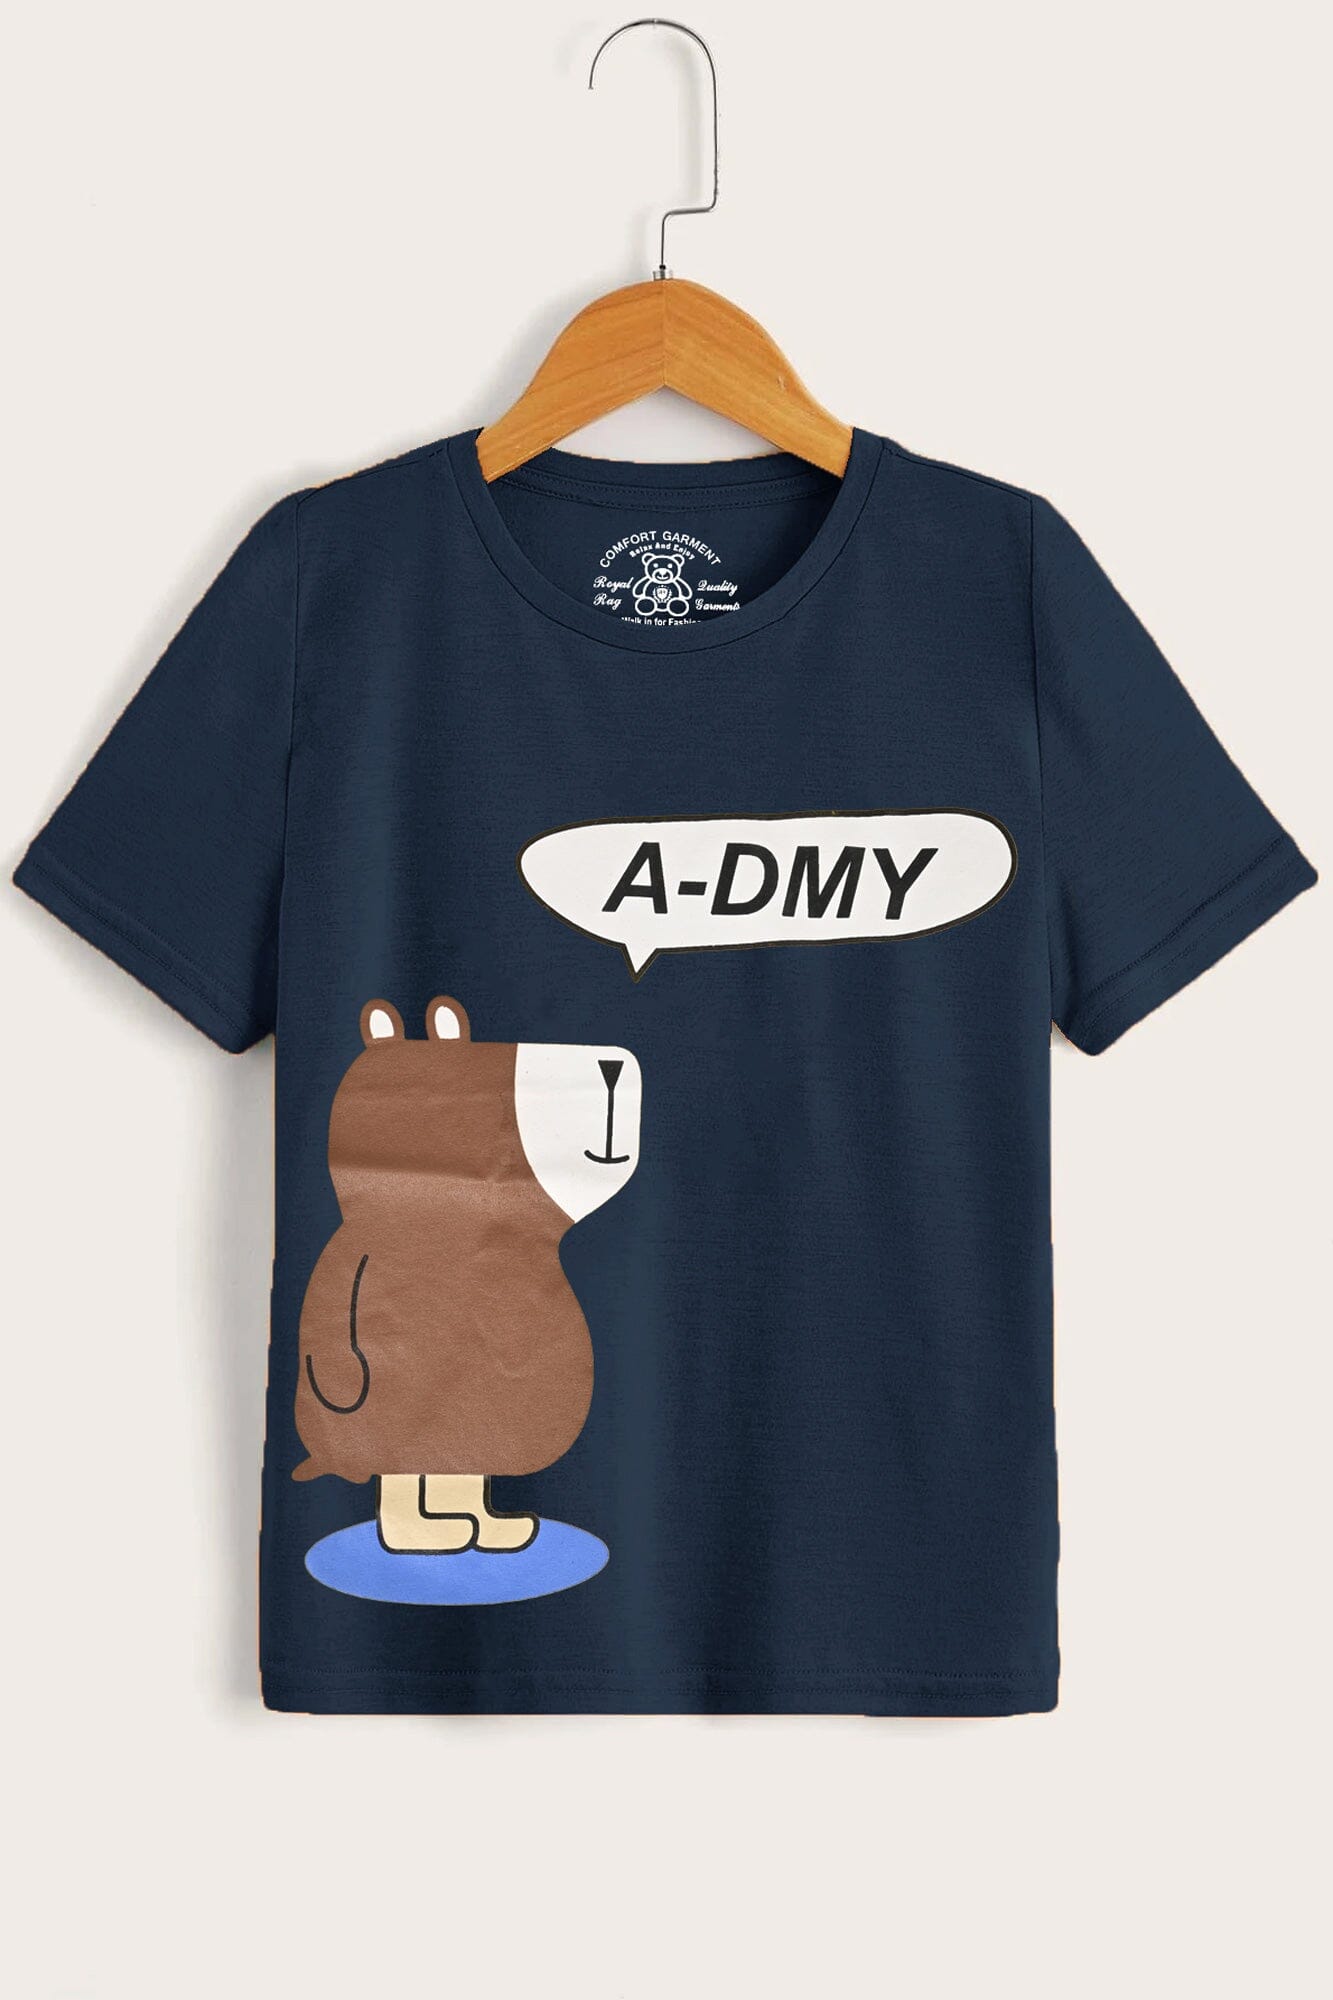 Comfort Kid's A-DMY Printed Short Sleeve Tee Shirt Boy's Tee Shirt Usman Traders Navy 2-3 Years 